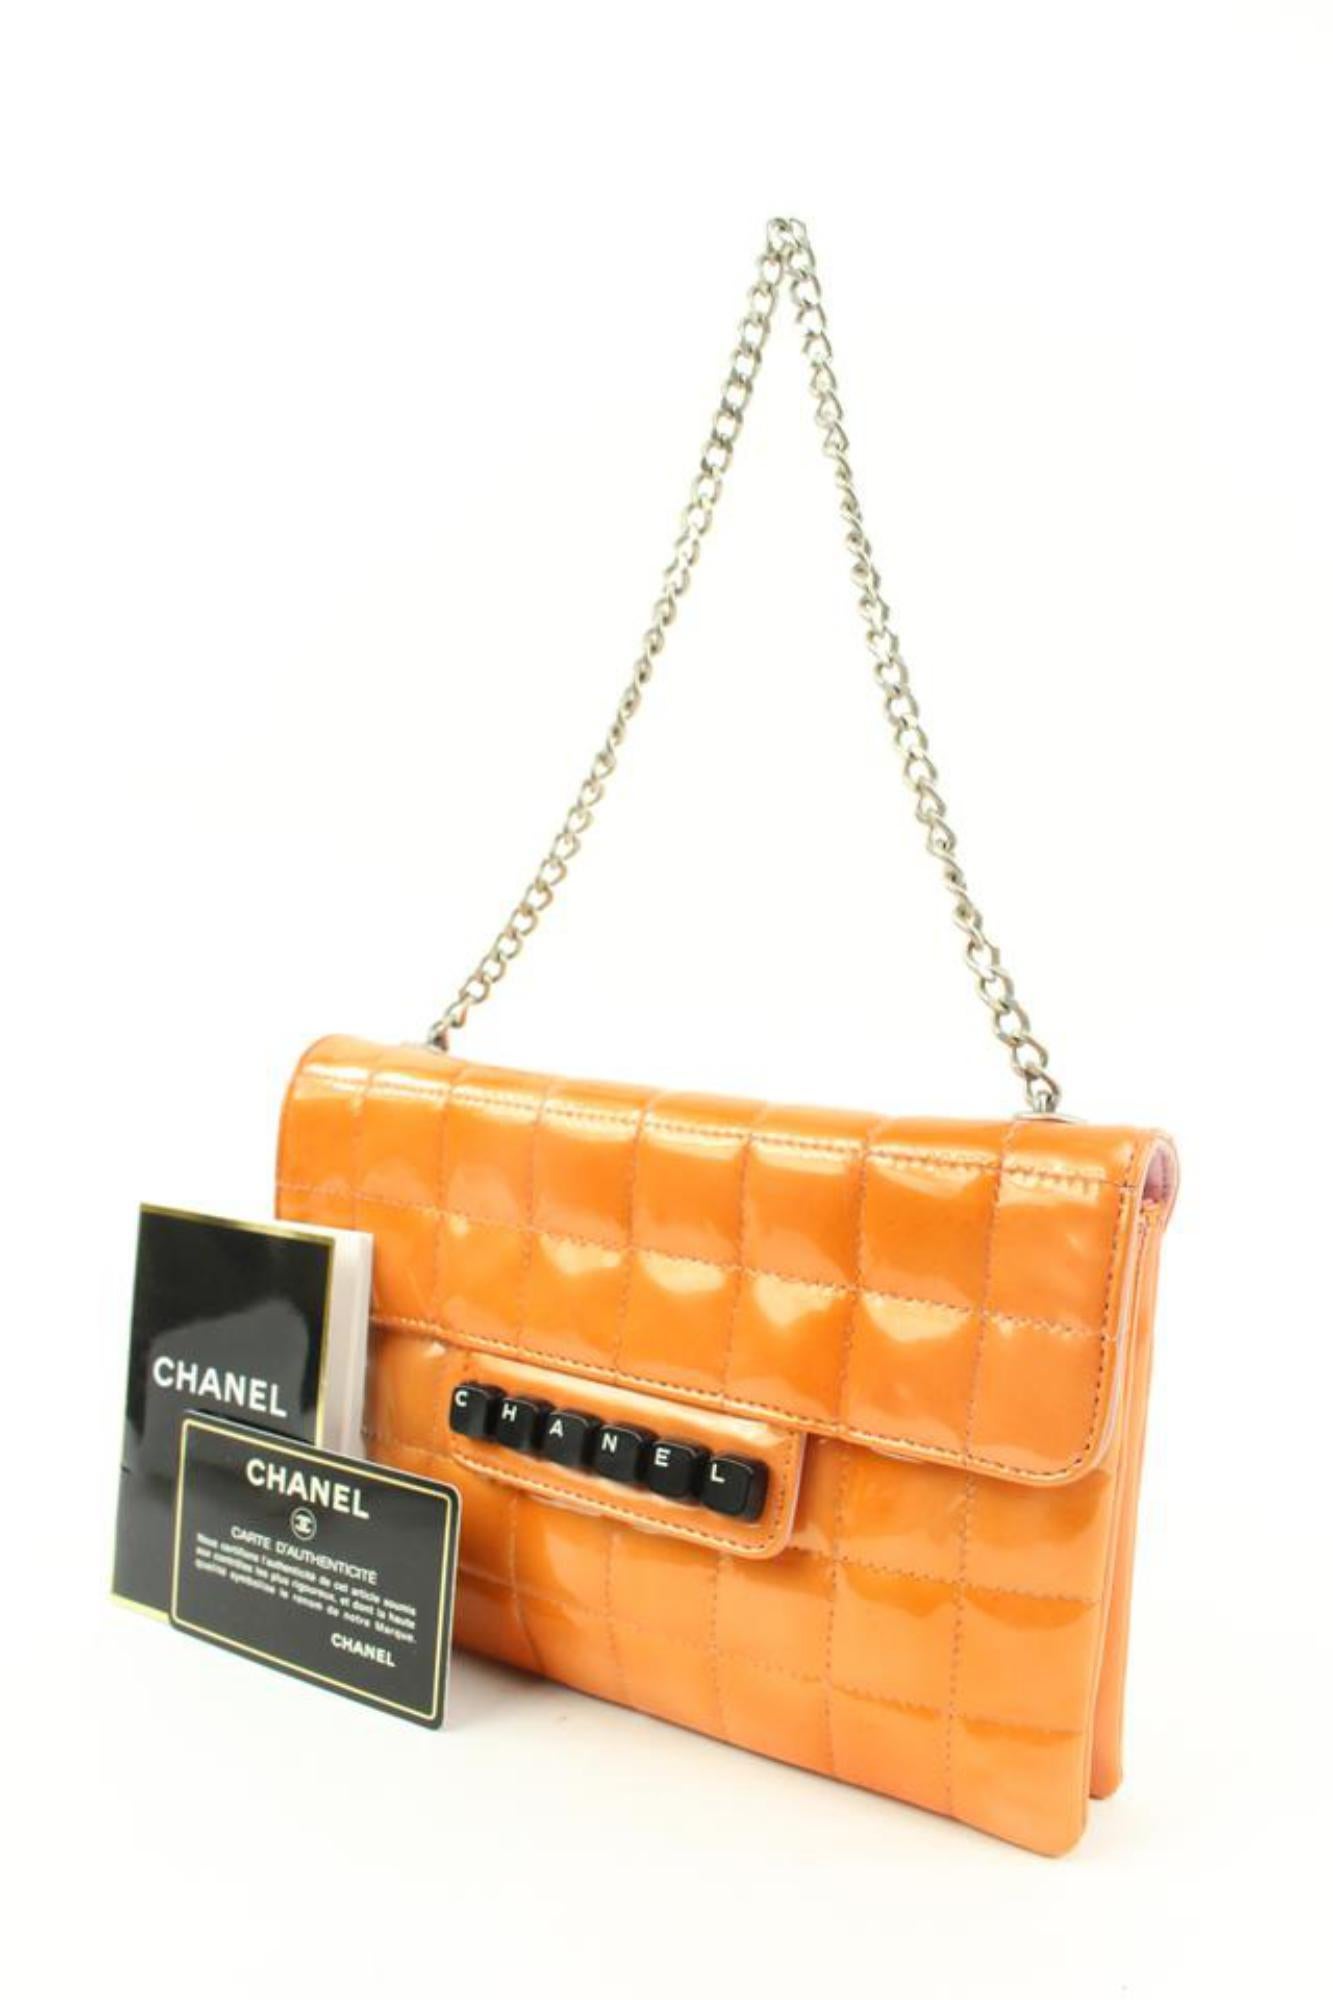 Chanel Keyboard - 5 For Sale on 1stDibs